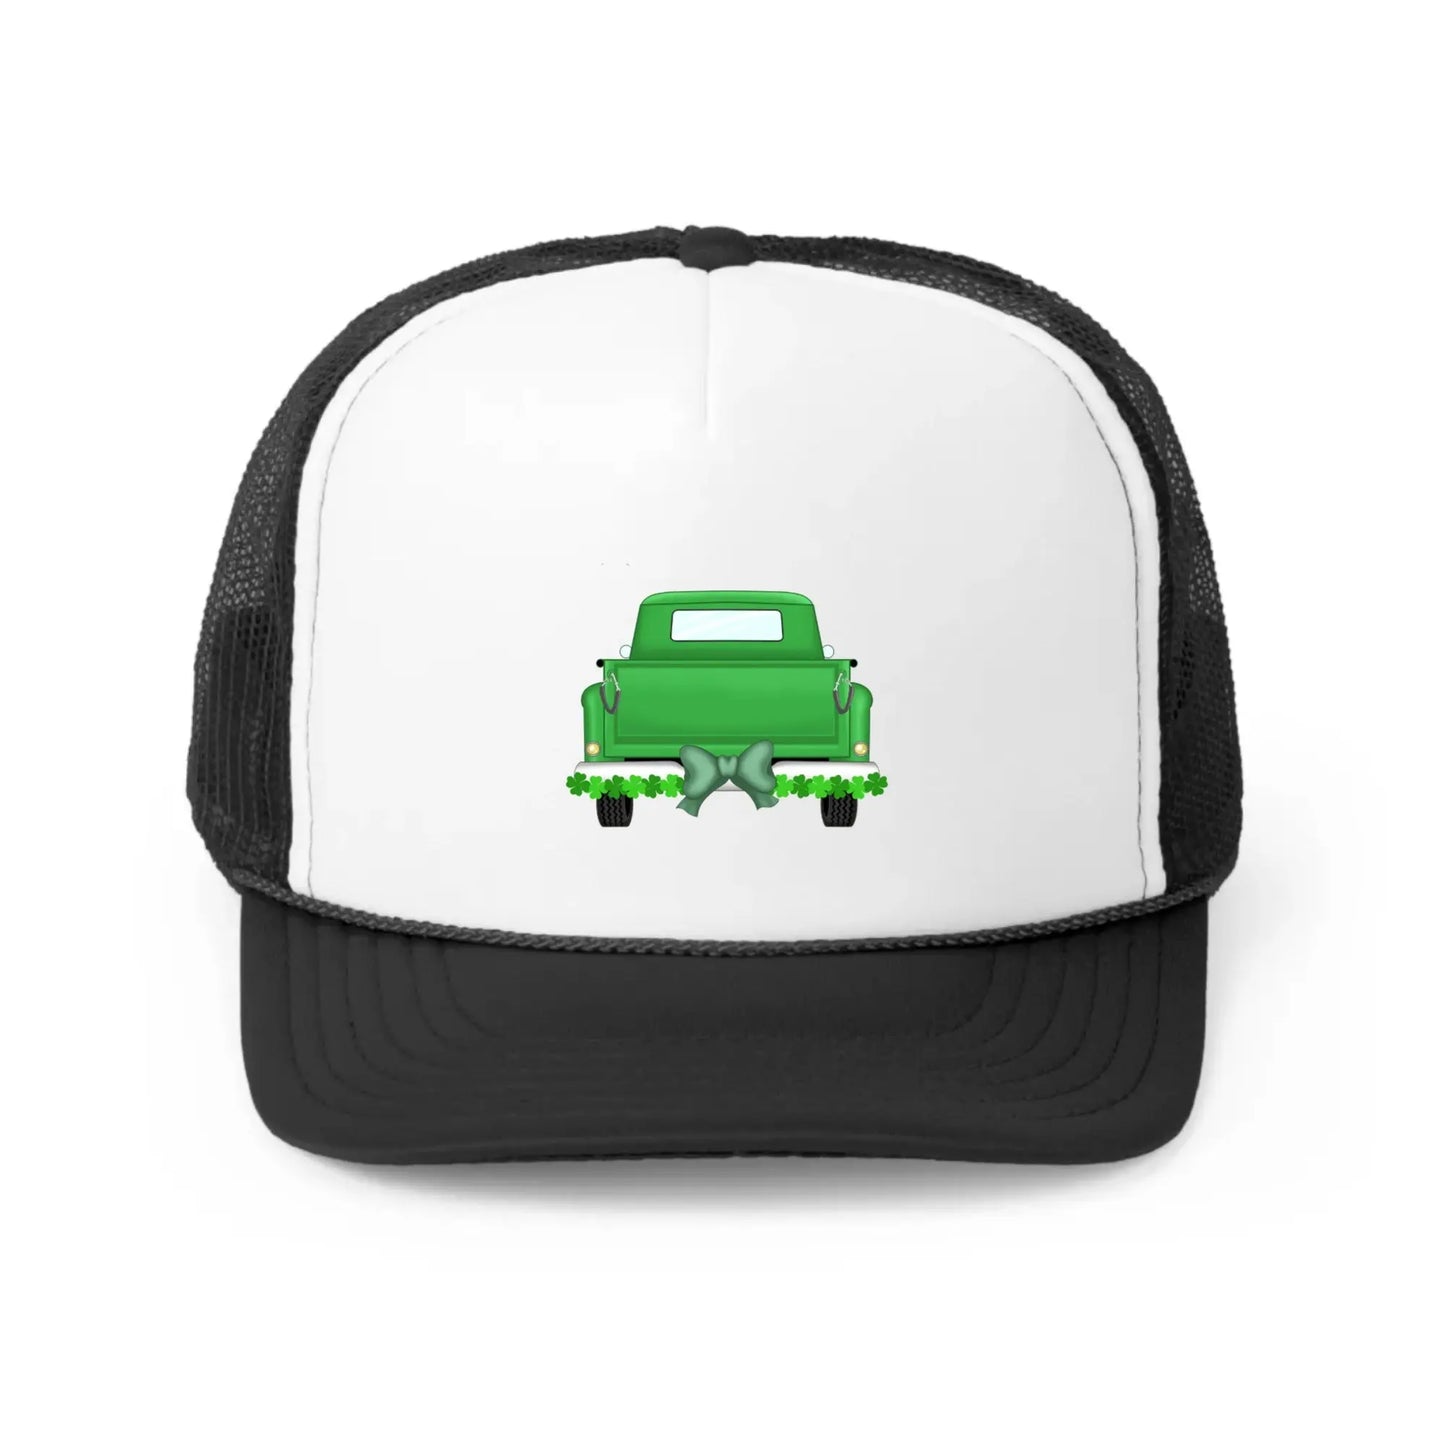 Trucker Caps - An Initial Impression